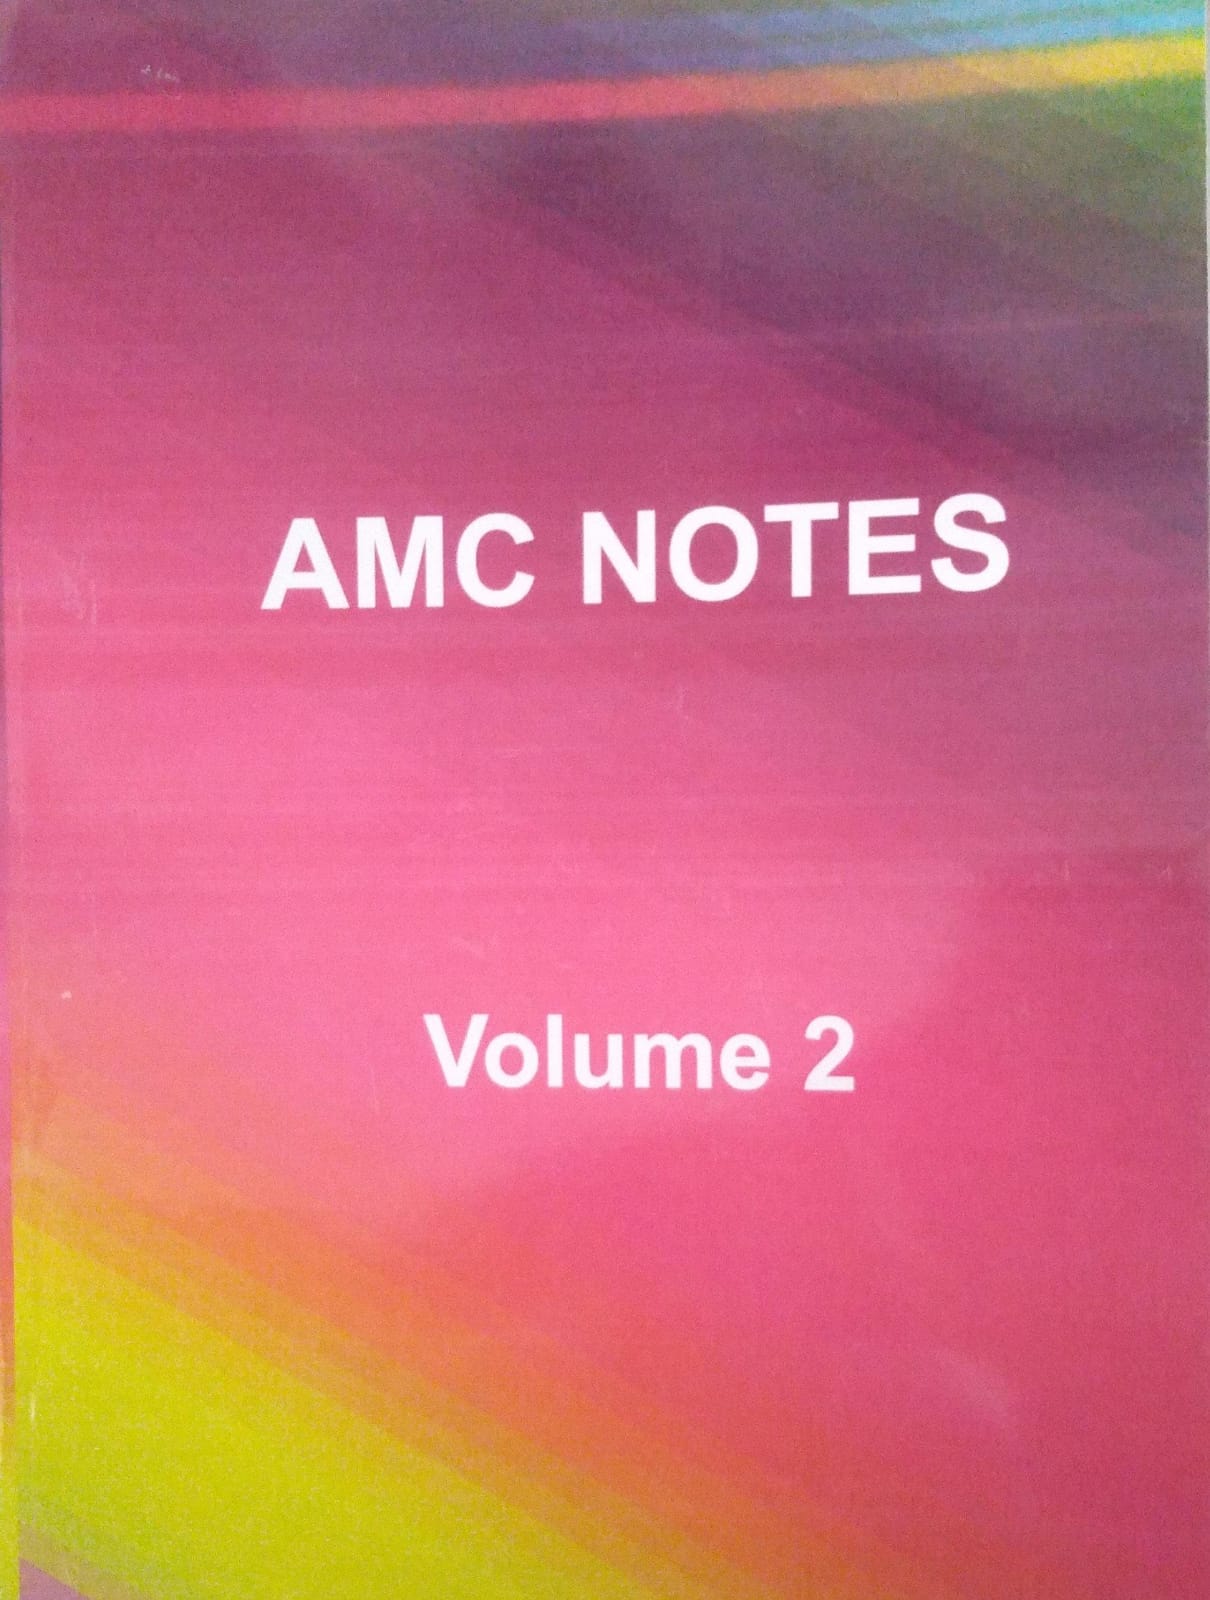 amc notes